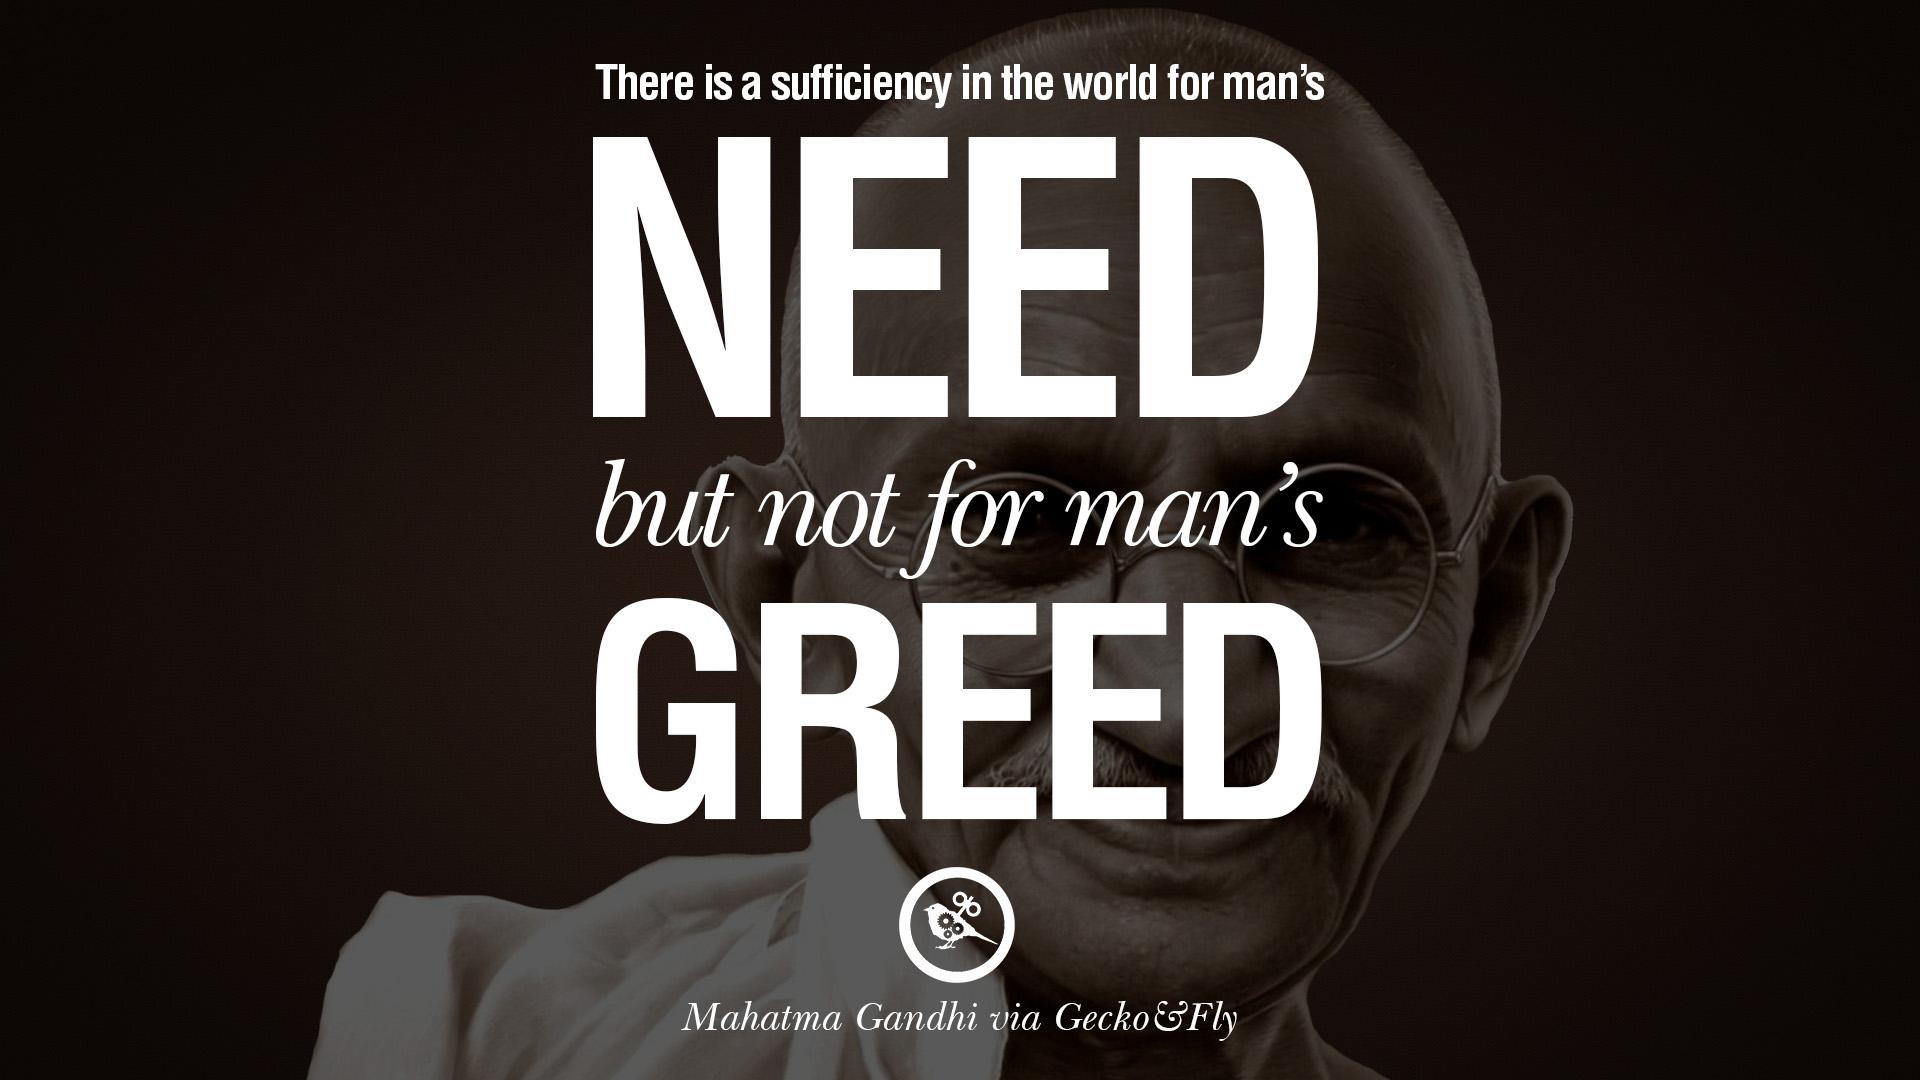 Mohandas Gandhi Quotes About Peace. QuotesGram